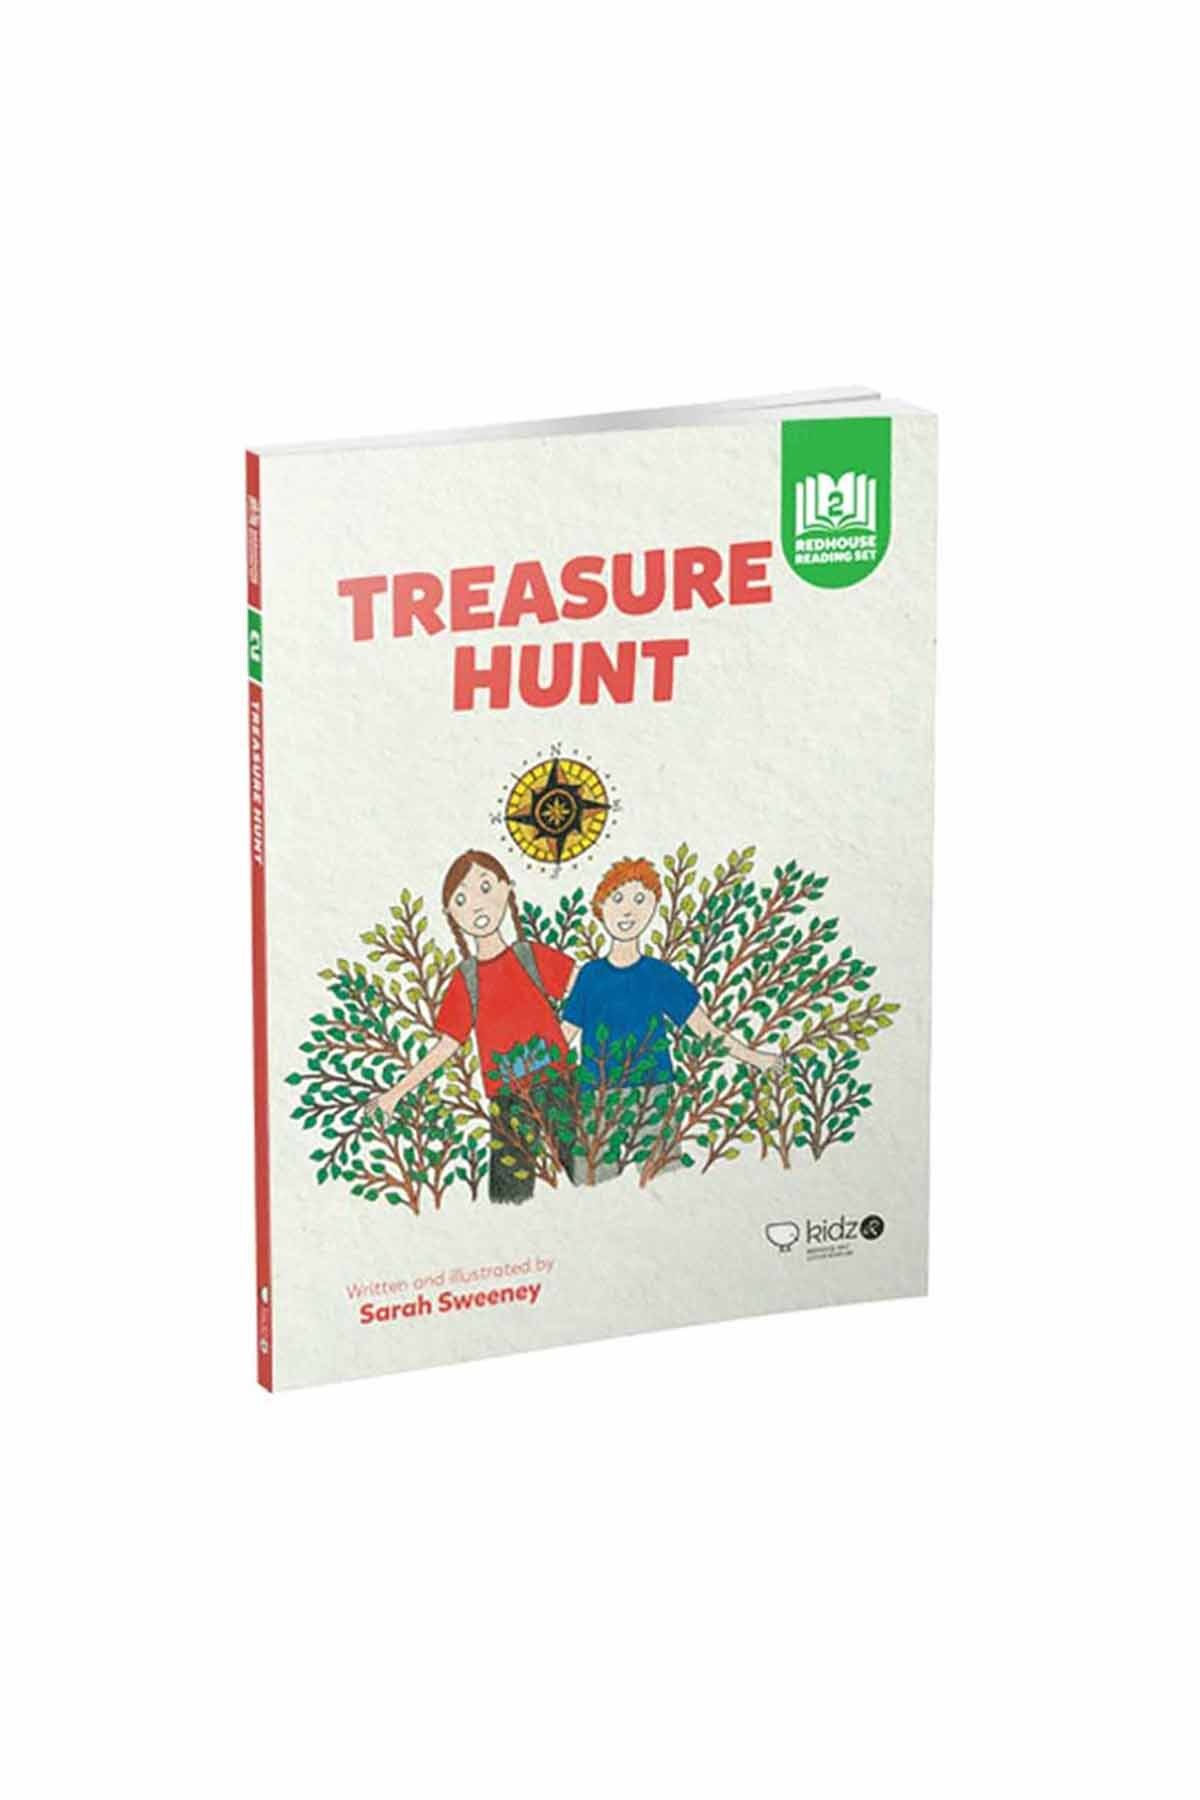 Redhouse Reading Set 2 Treasure Hunt